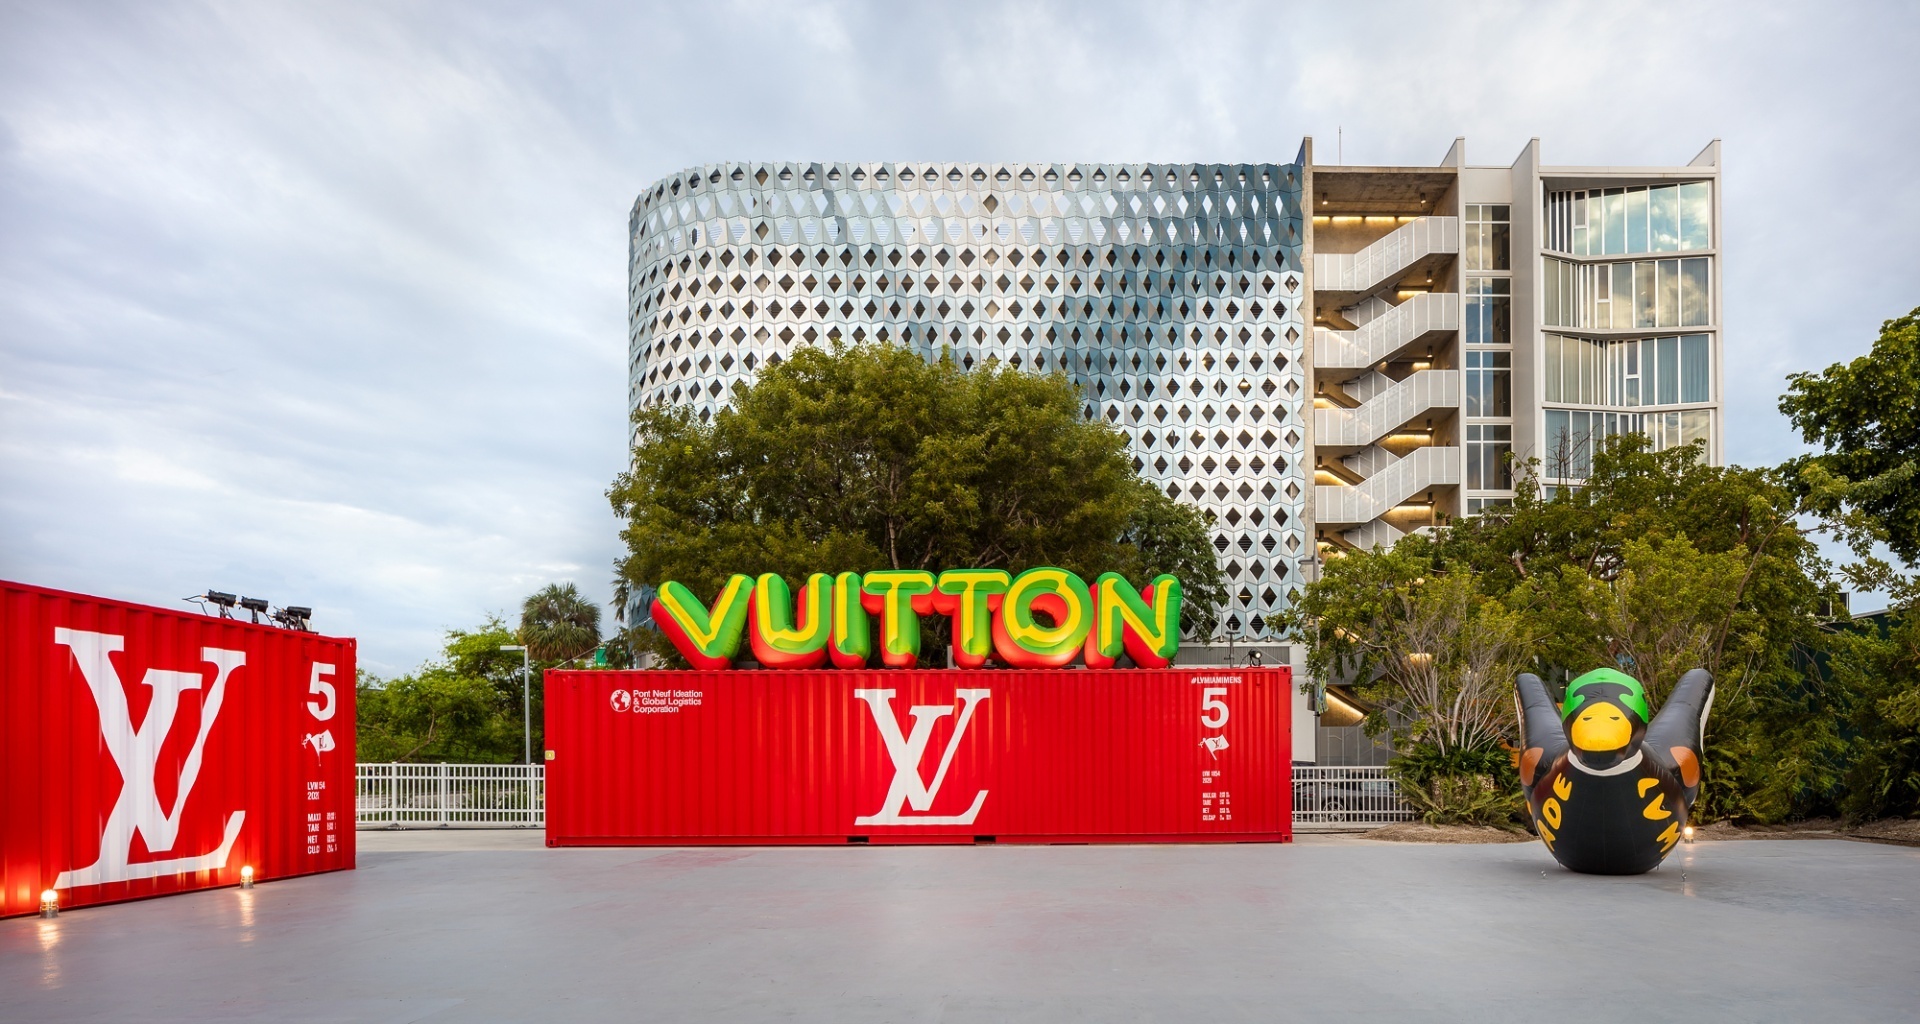 Miami Design District Sets Stage for Louis Vuitton Pop-Up